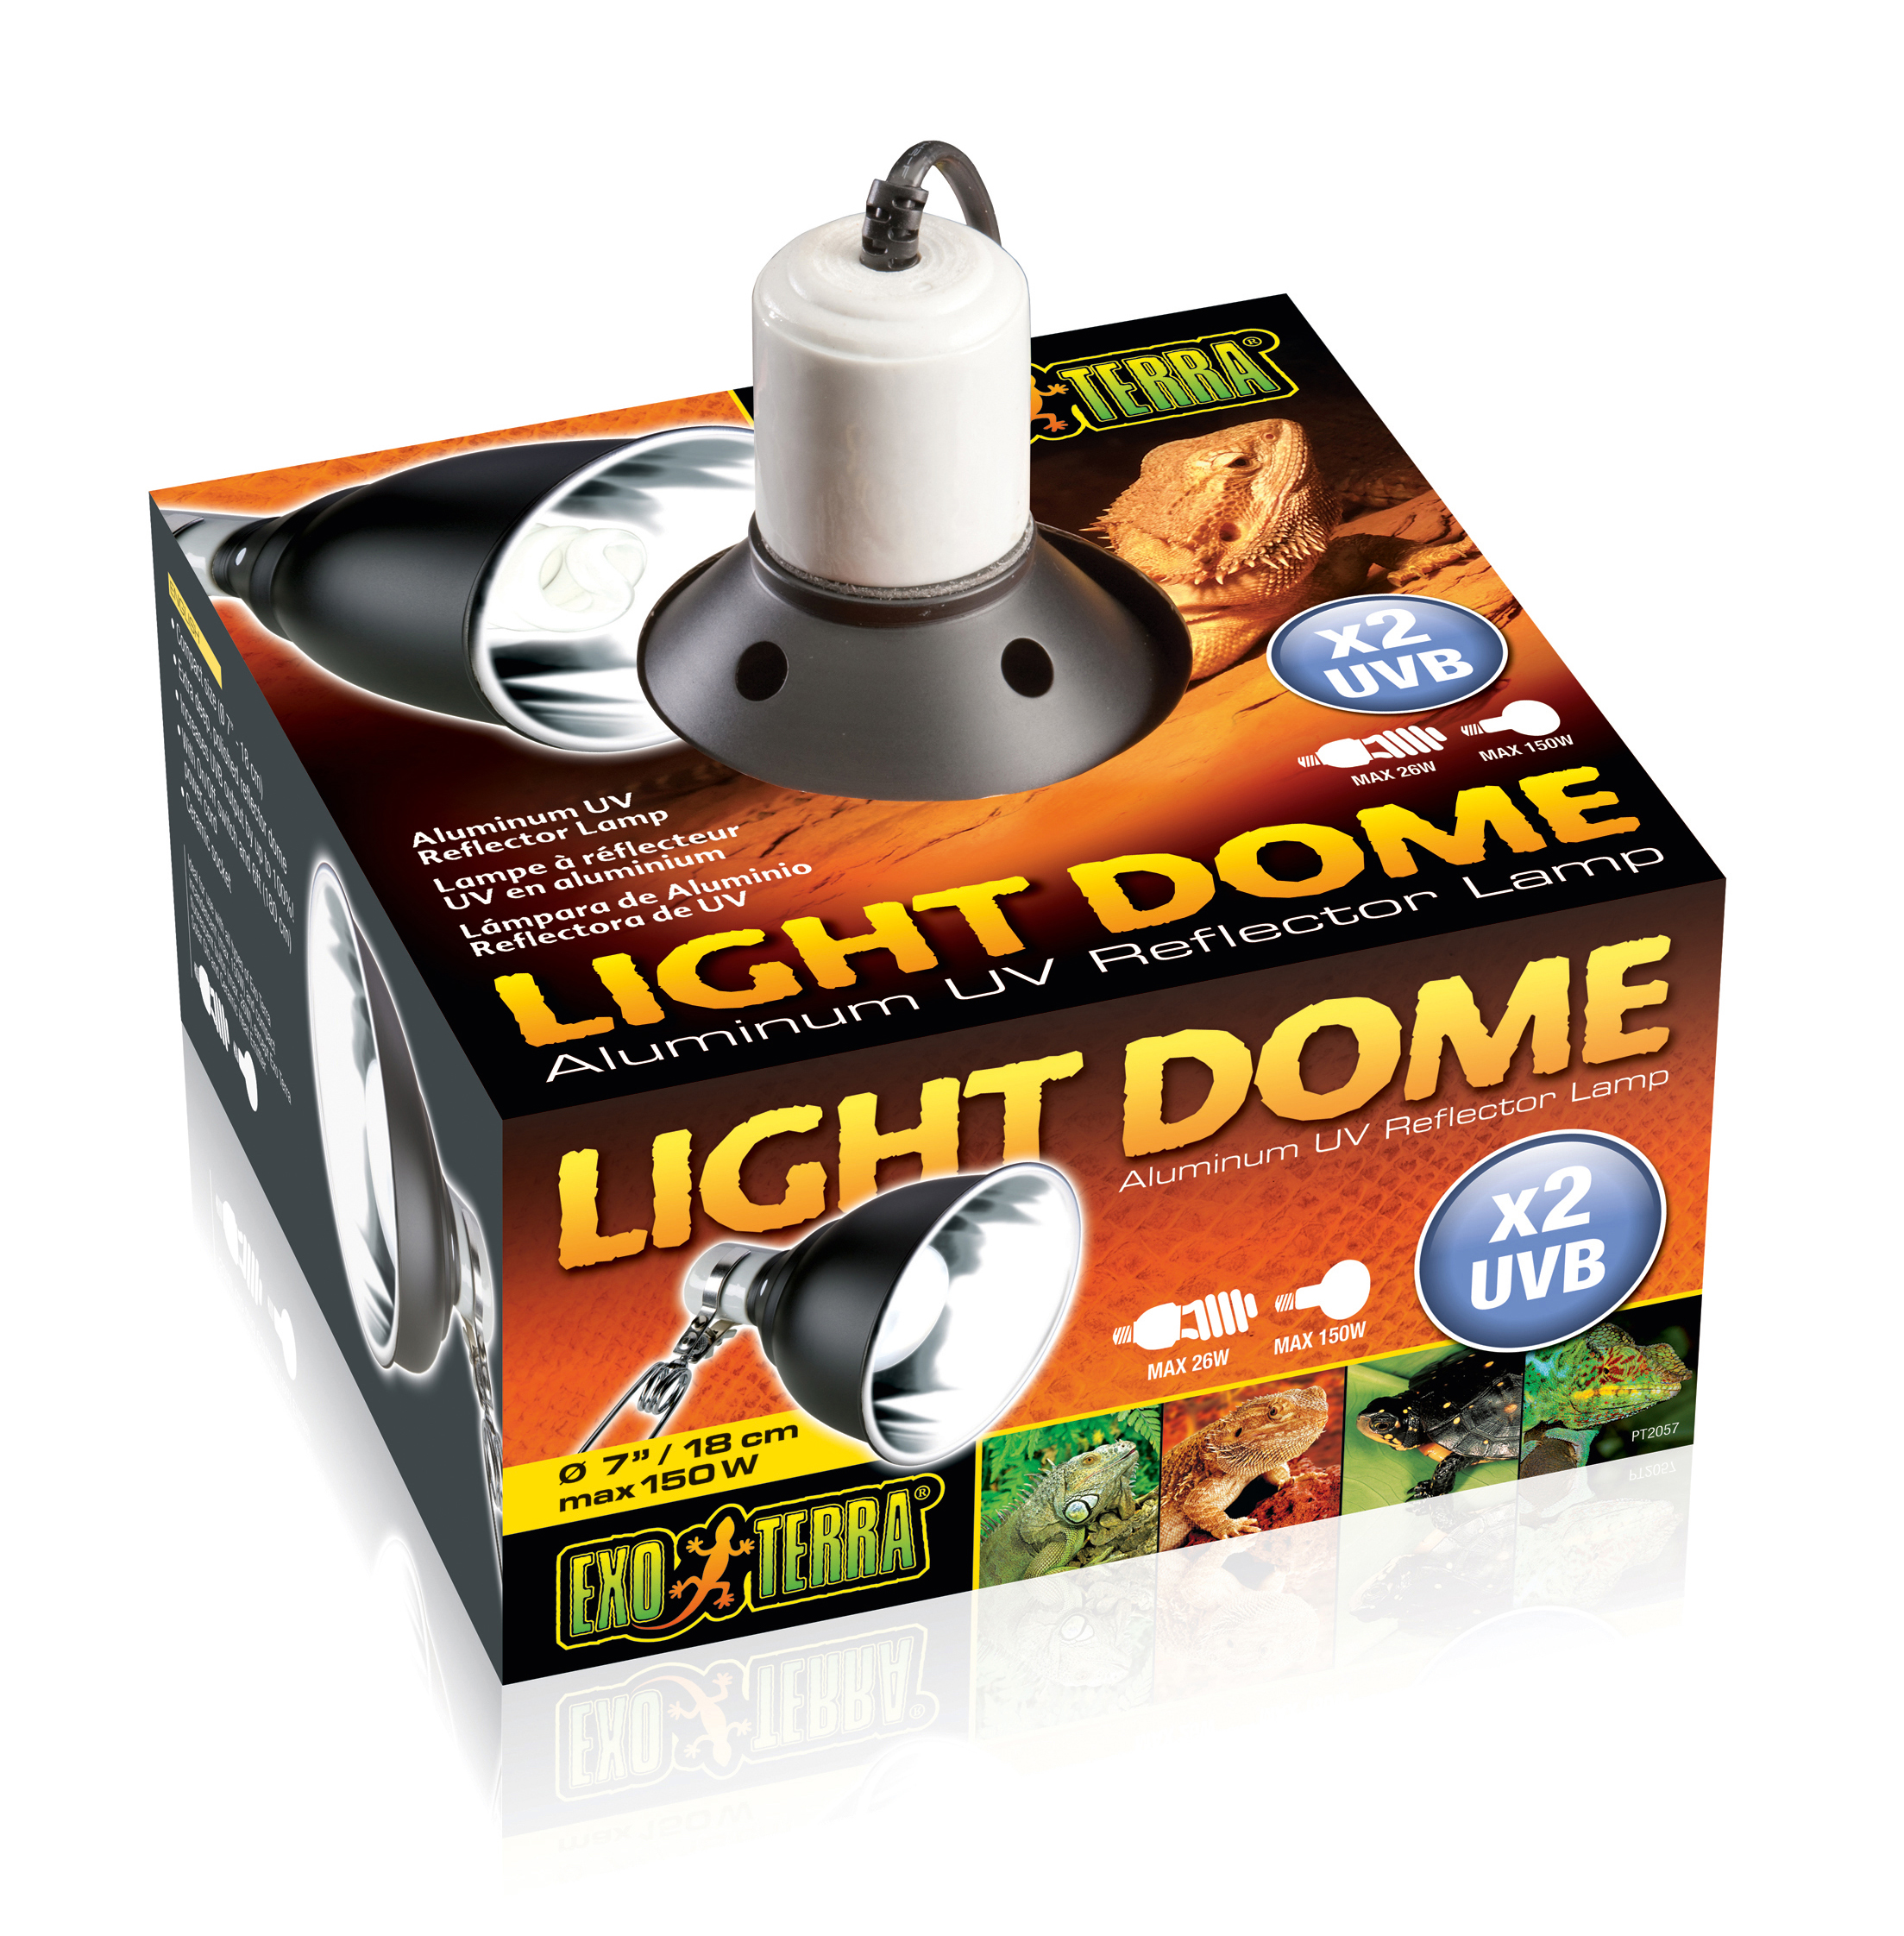 Ex light dome lighting fixture - <Product shot>